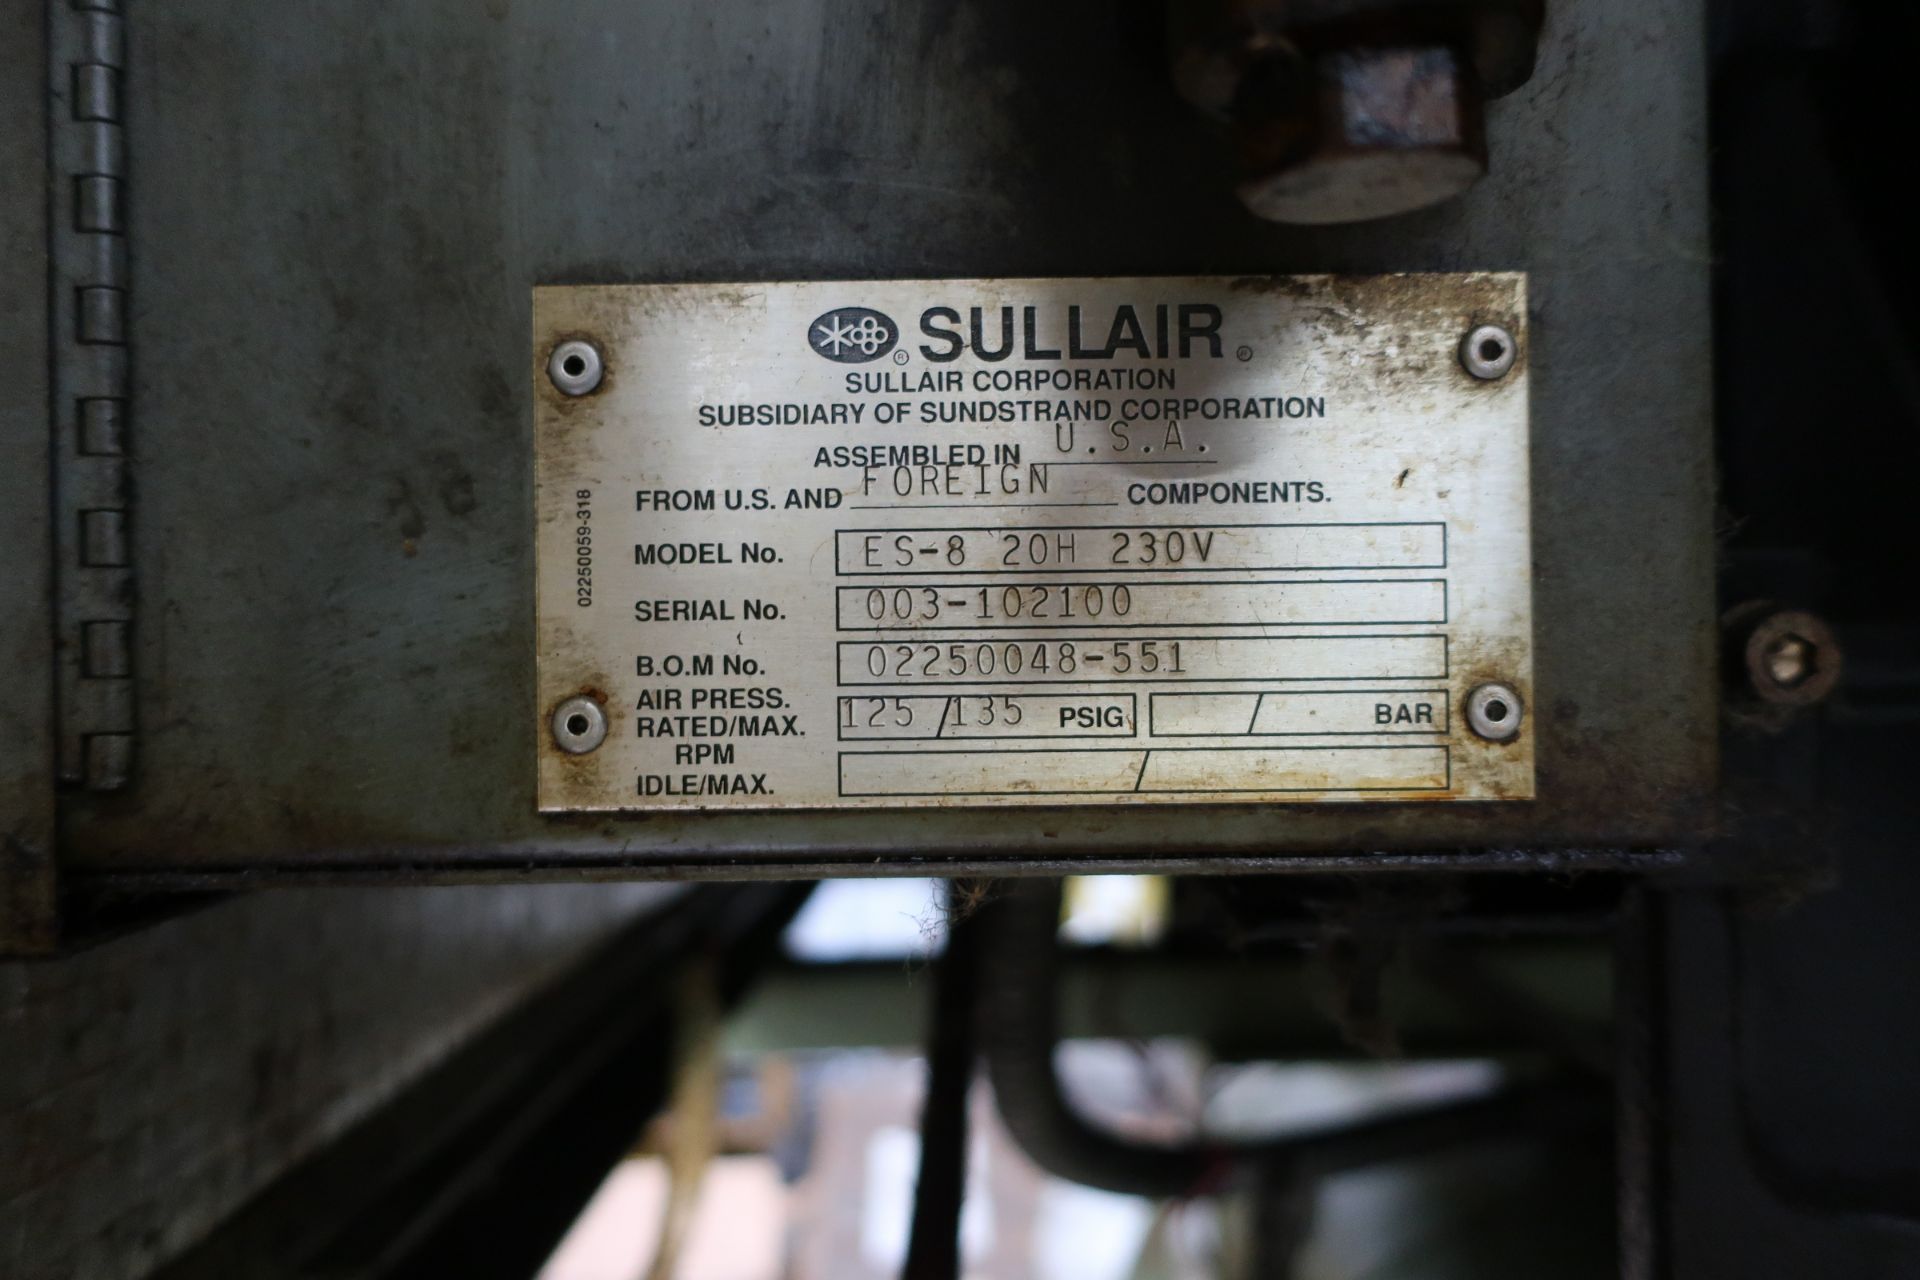 125 psi Sullair ES-8 20hp Air Compressor, SN 003-102100 - Image 4 of 6